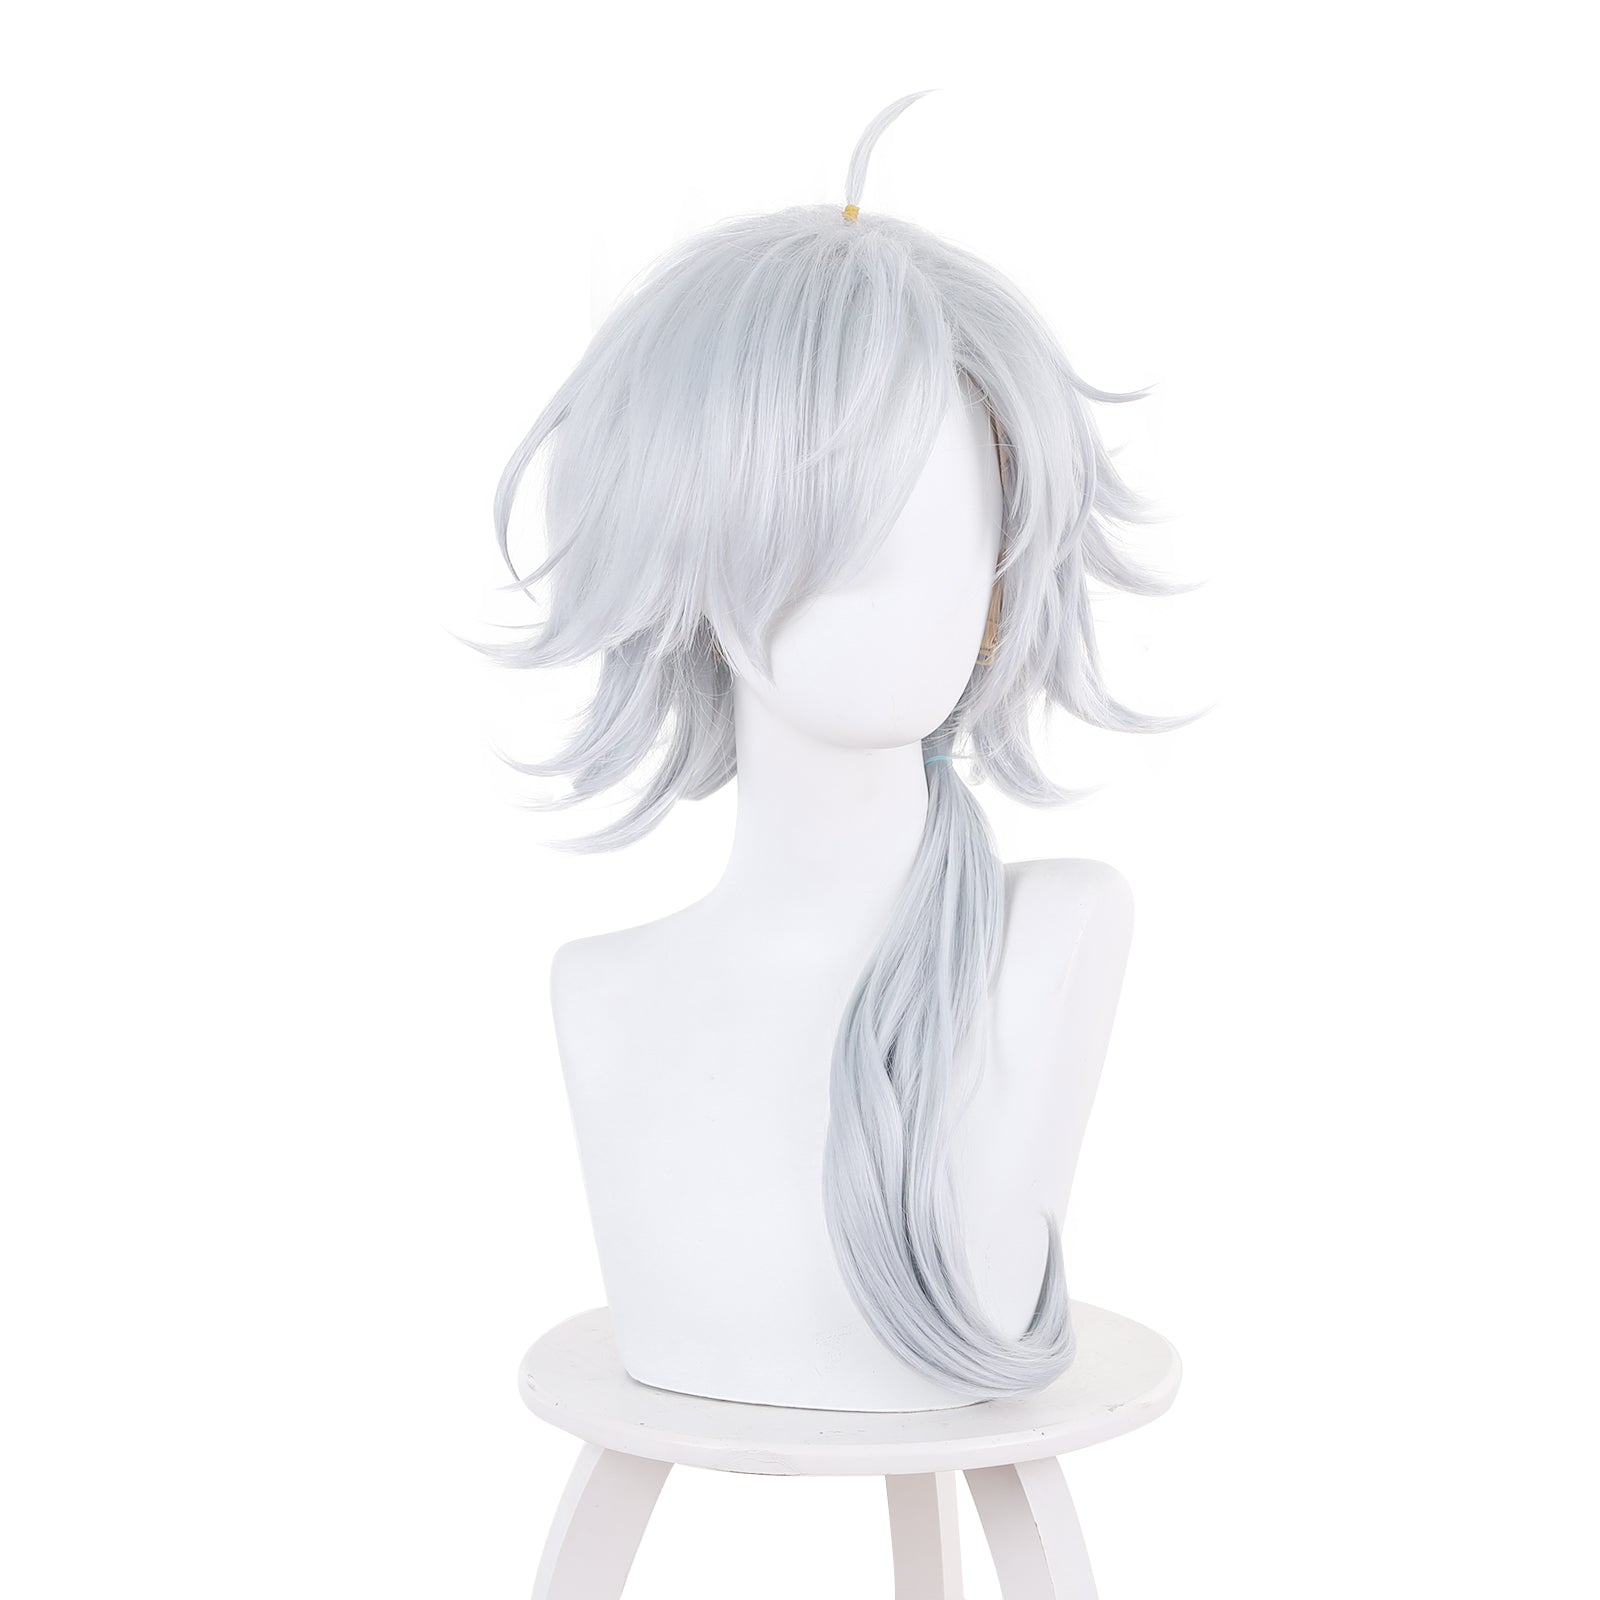 Rulercosplay Anime Spy Classroom Monika White Long Cosplay Wig